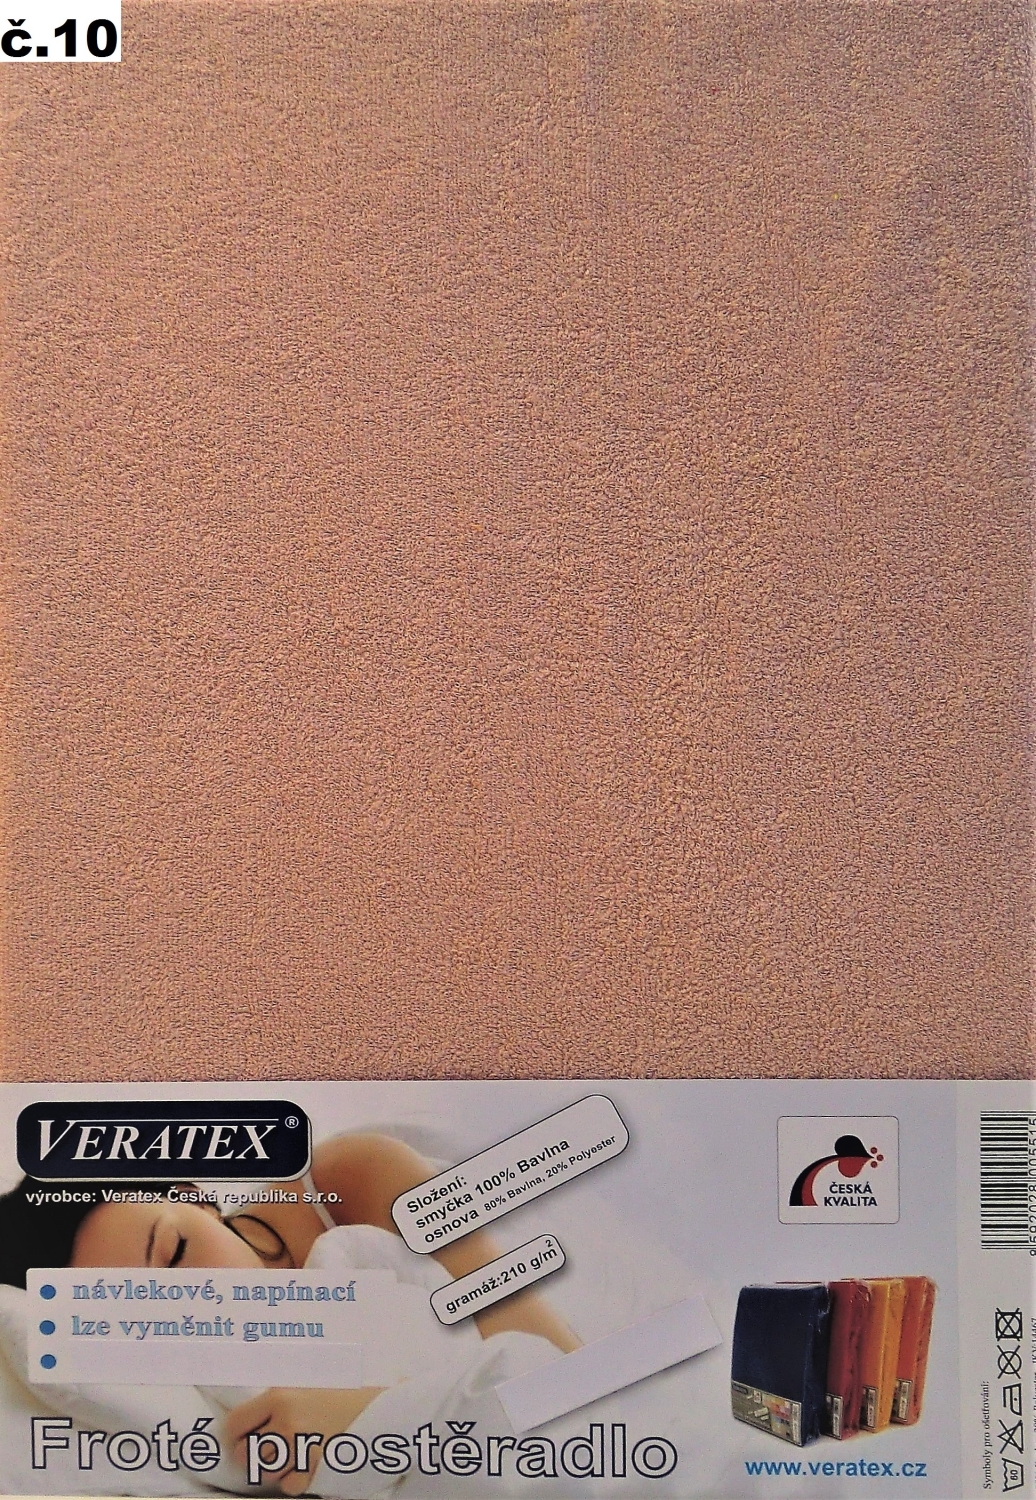 Veratex Froté prostěradlo jednolůžko 100x200/25cm (č.10-starorůžové)